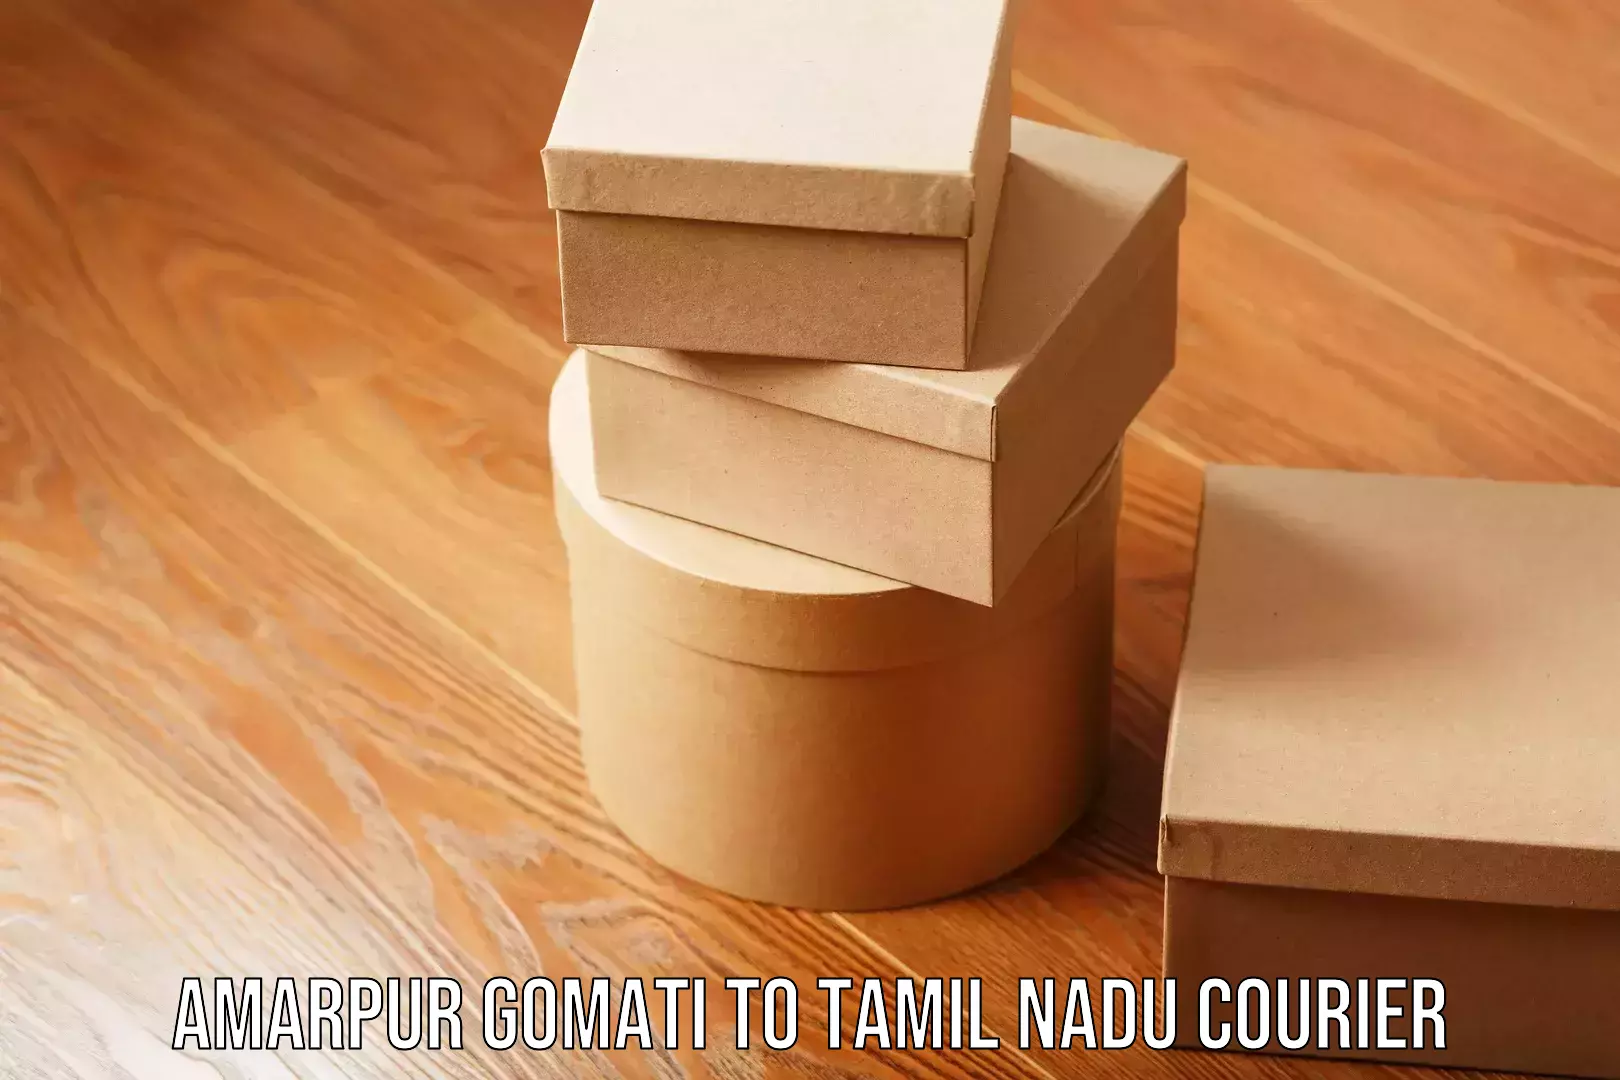 Customizable delivery plans Amarpur Gomati to Tamil Nadu